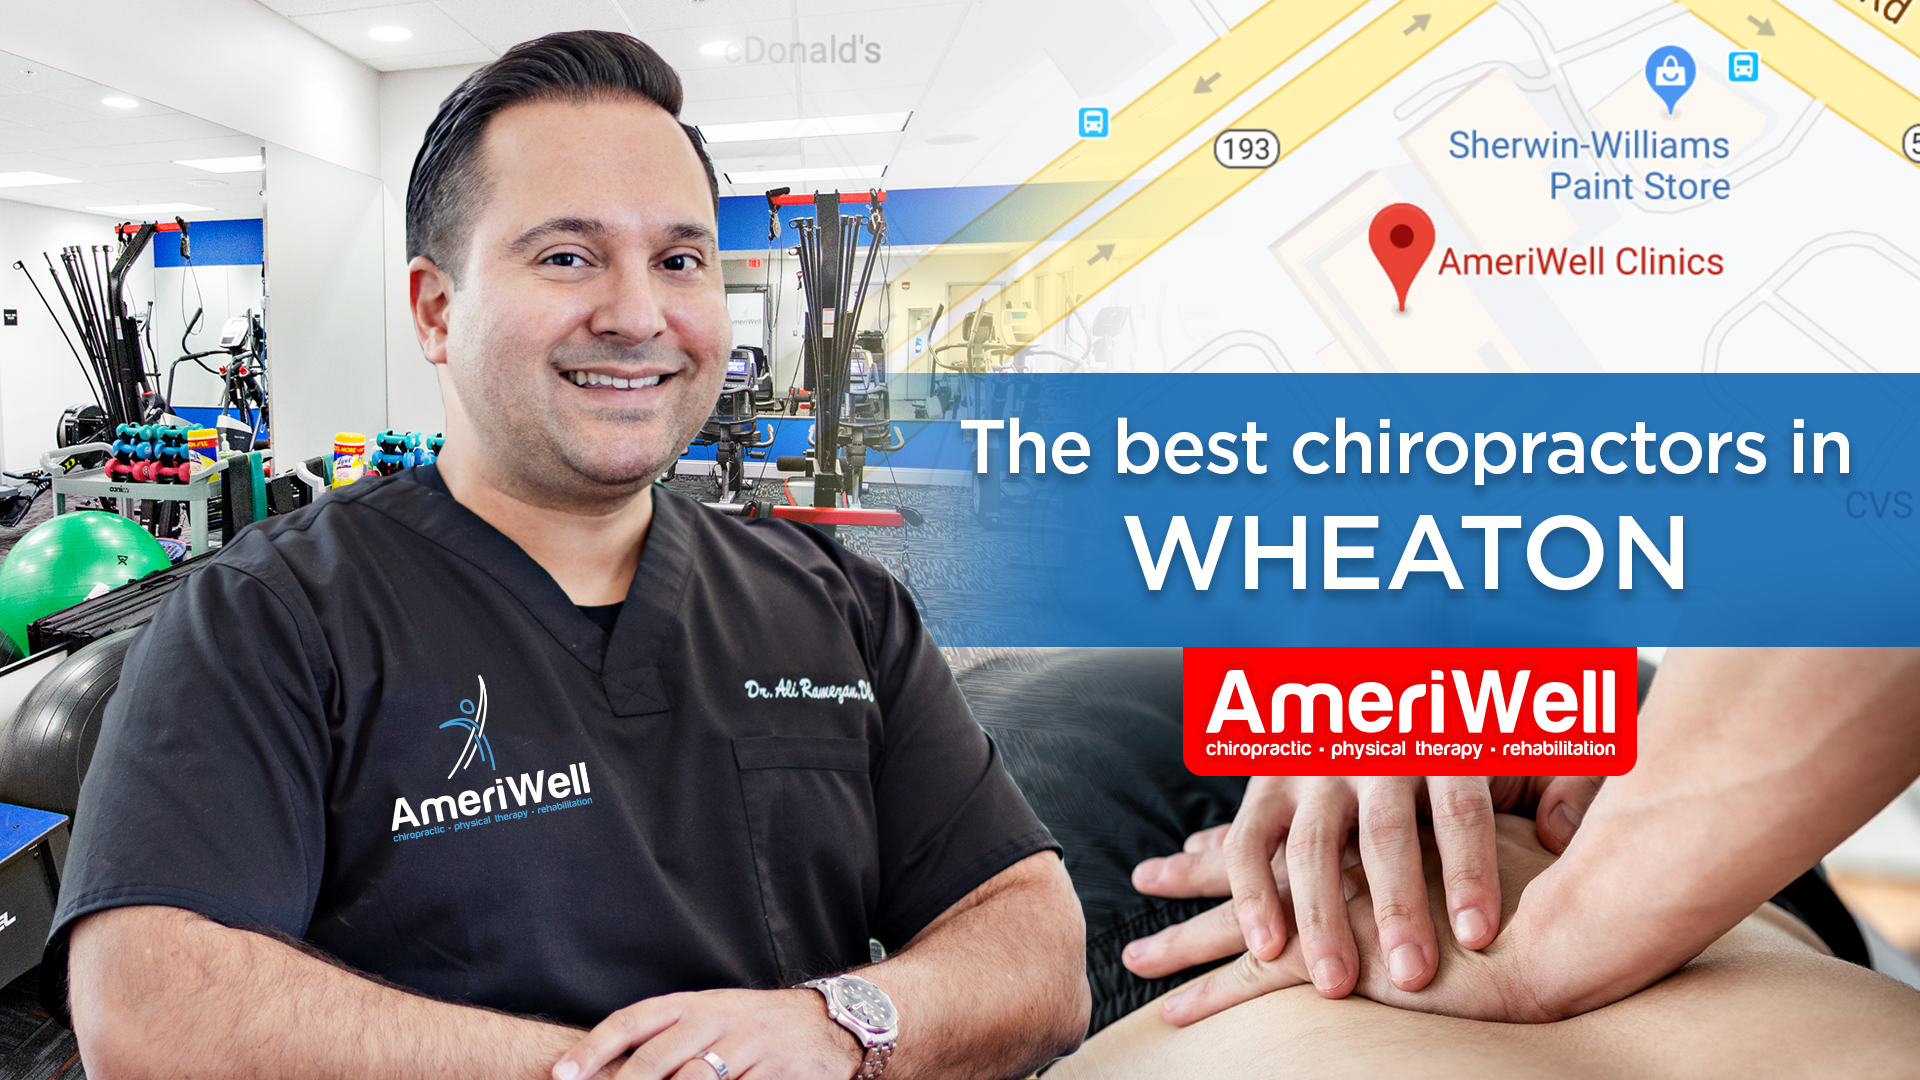 Wheaton – Ameriwell Clinics the best chiropractors